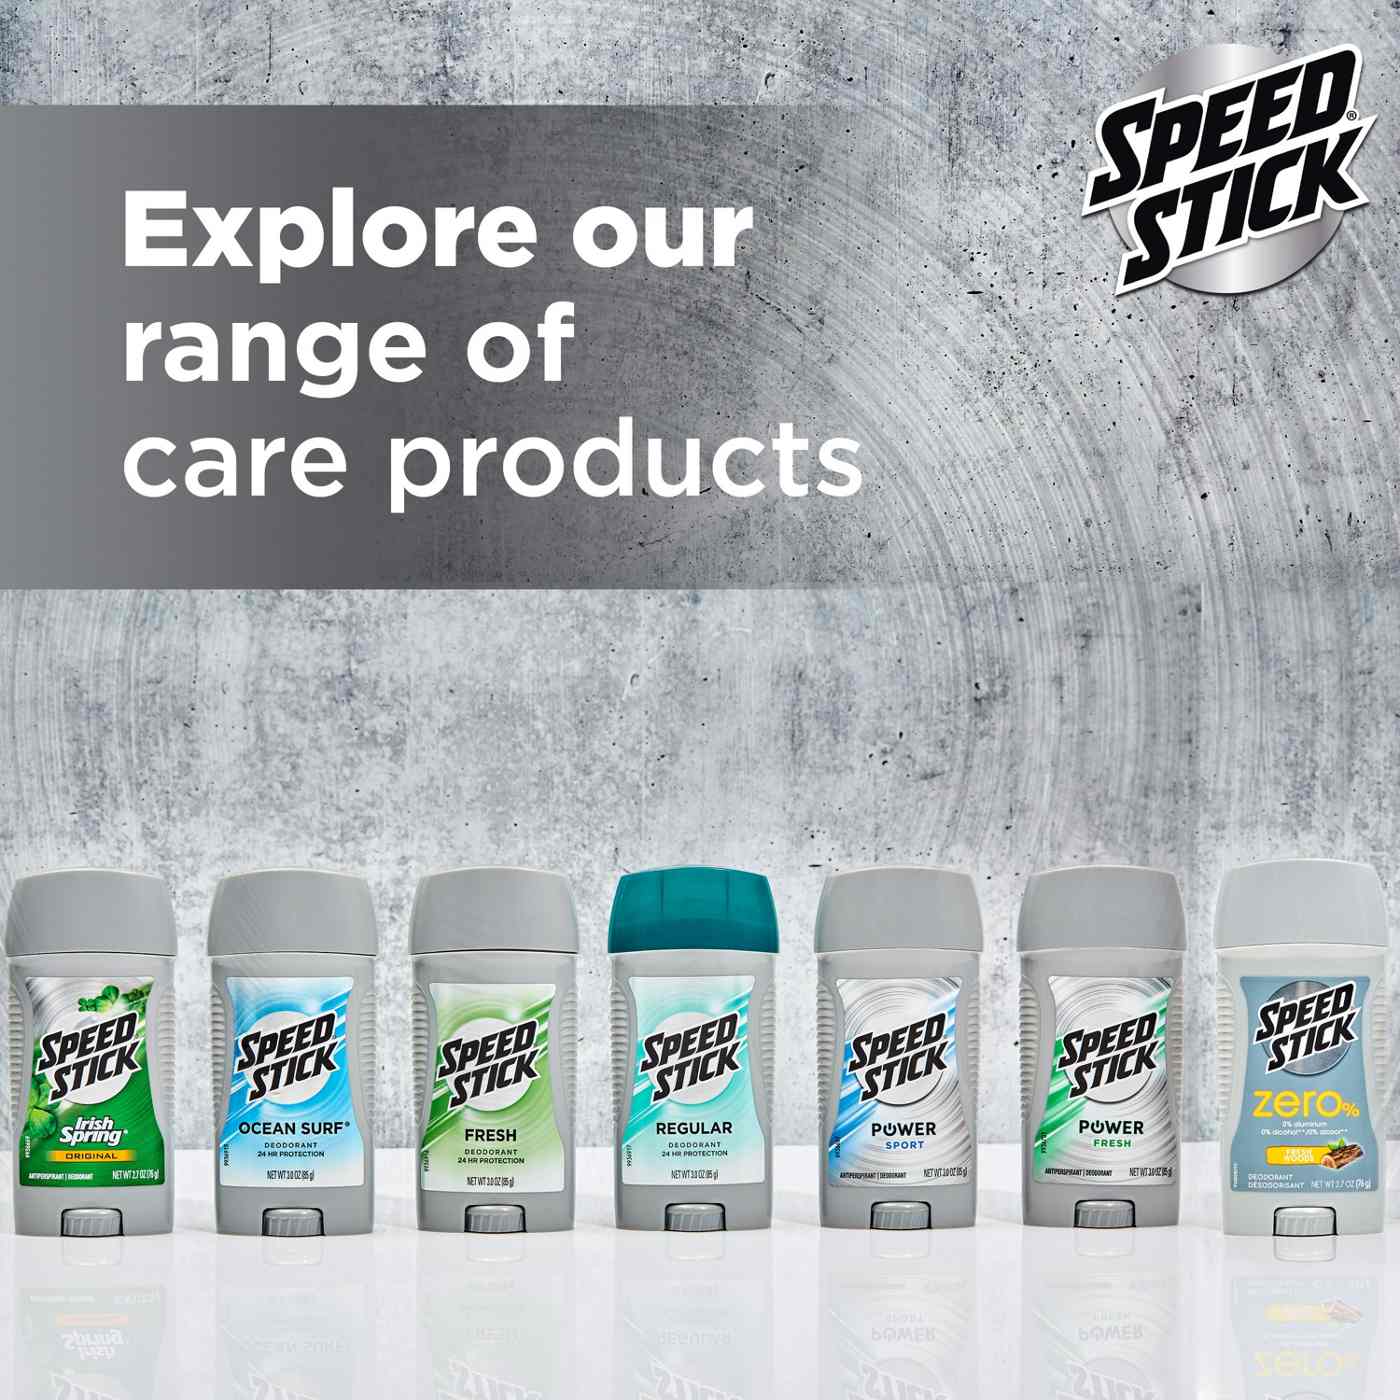 Speed Stick Deodorant - Power Fresh ; image 8 of 10